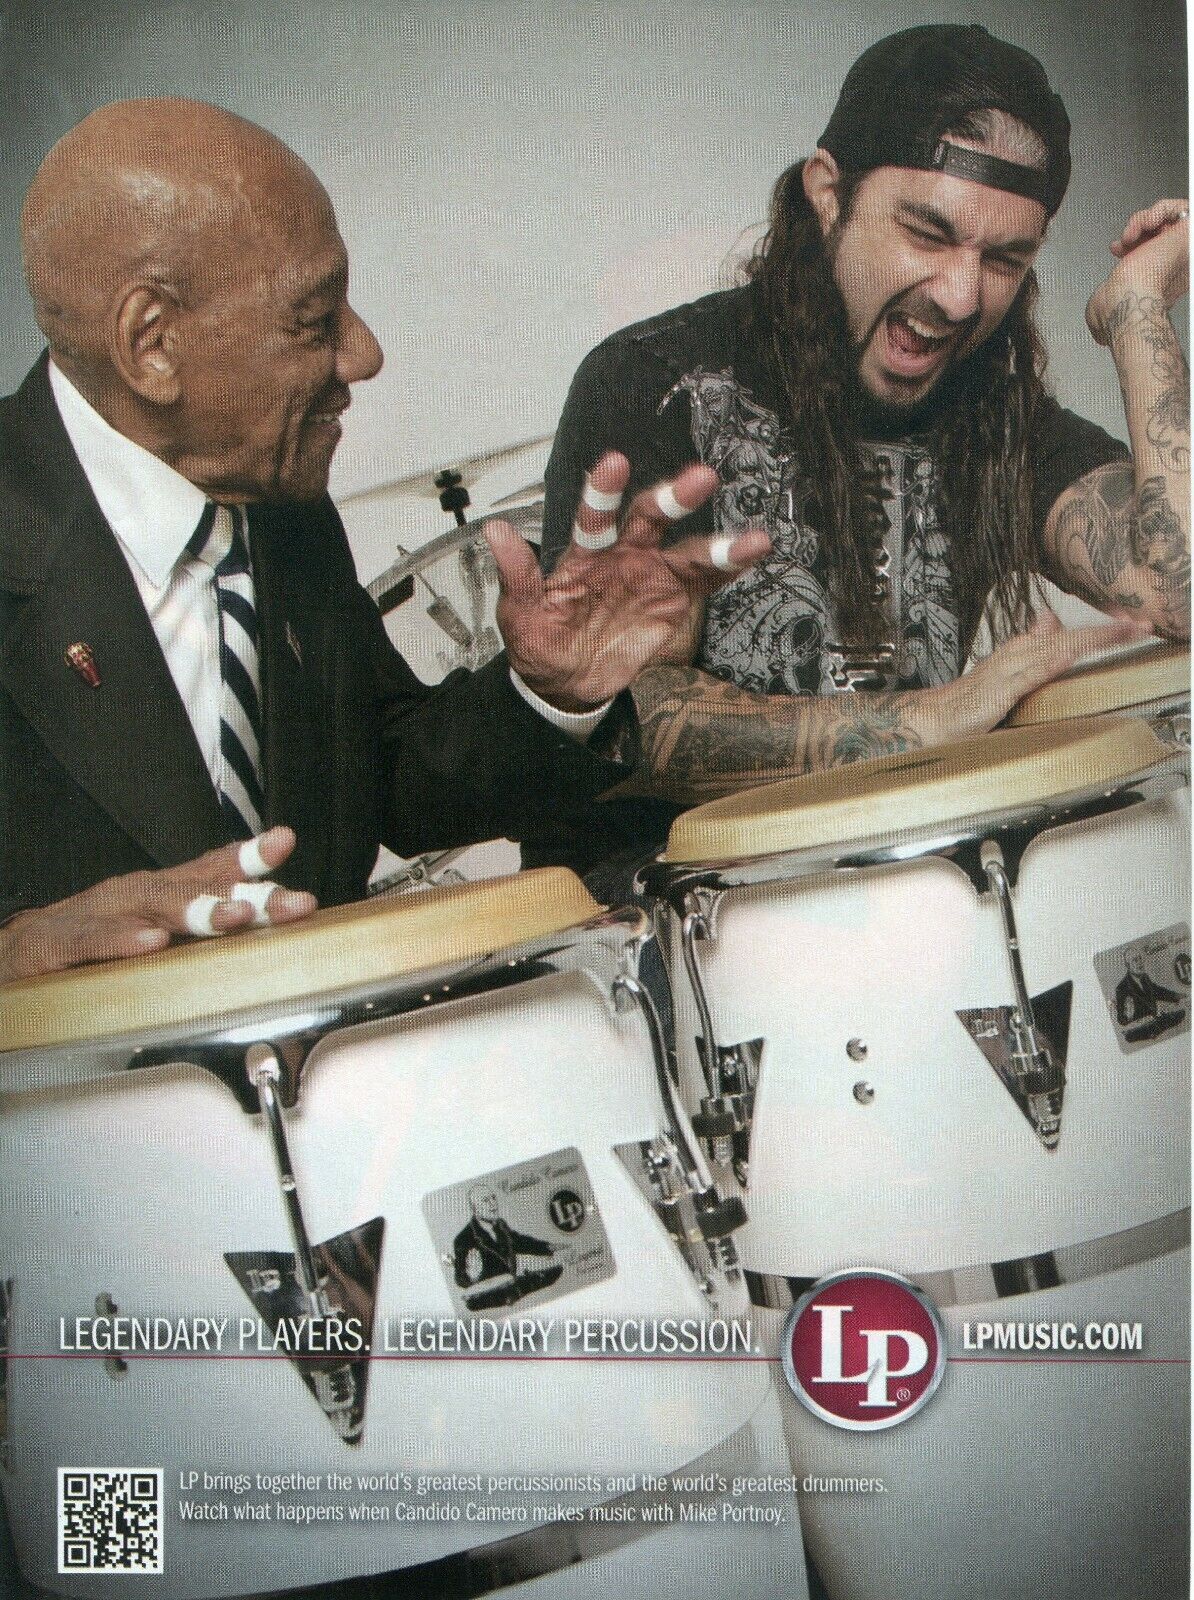 2012 Print Ad of Latin Percussion LP w Candido Camero & Mike Portnoy